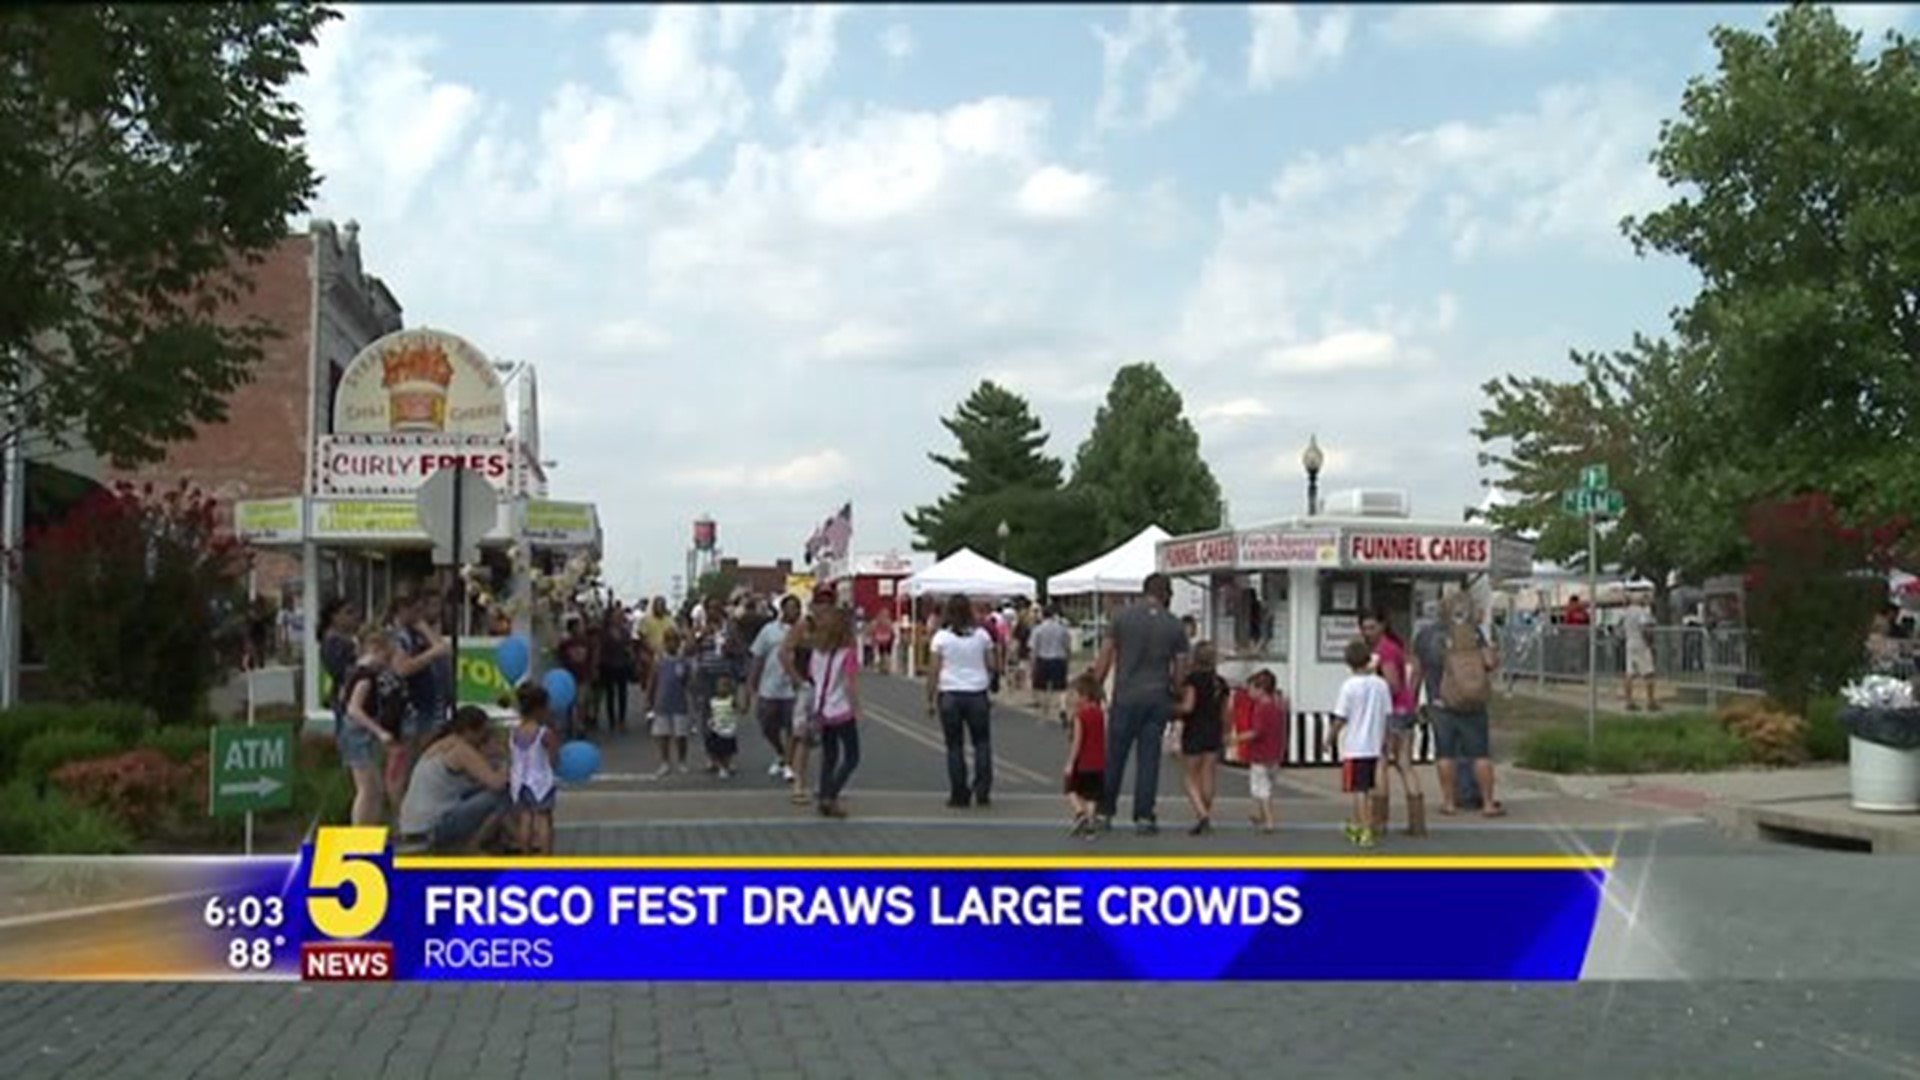 Frisco Fest